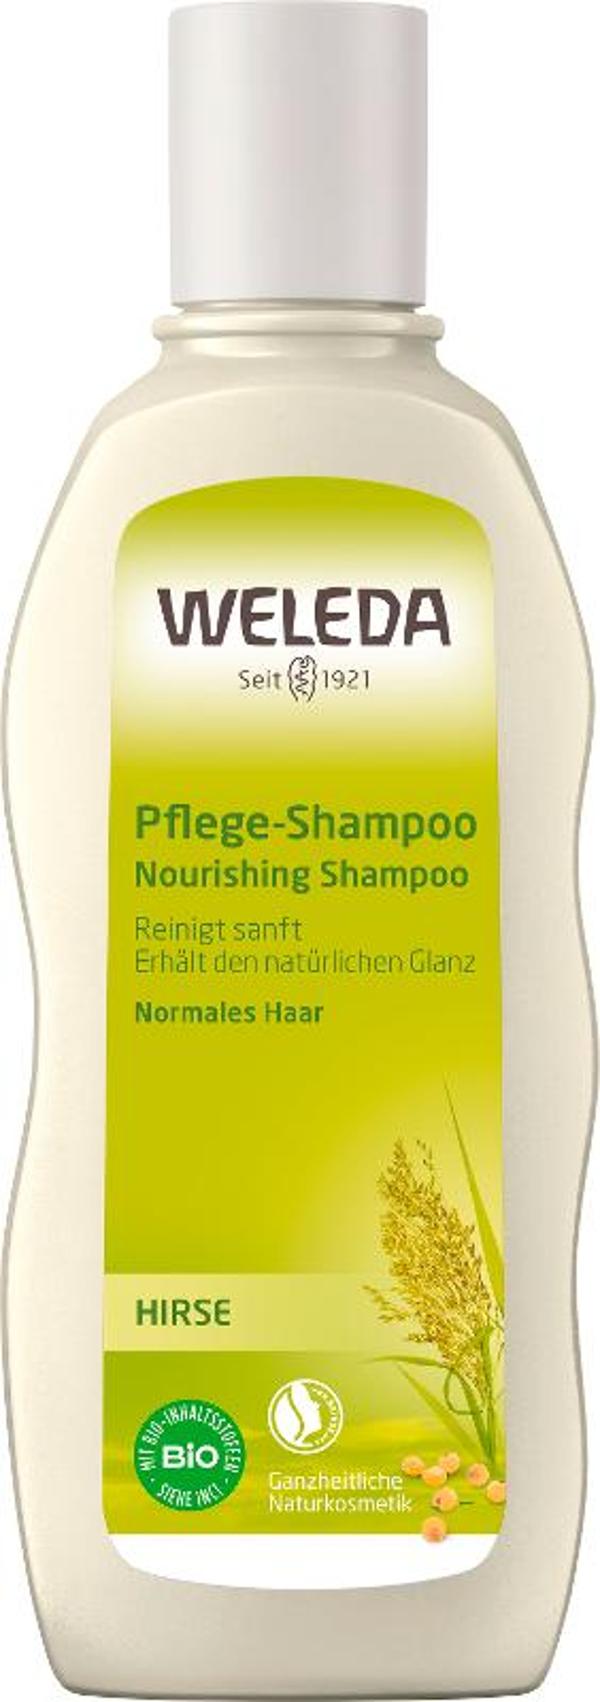 Produktfoto zu Hirse Pflege Shampoo